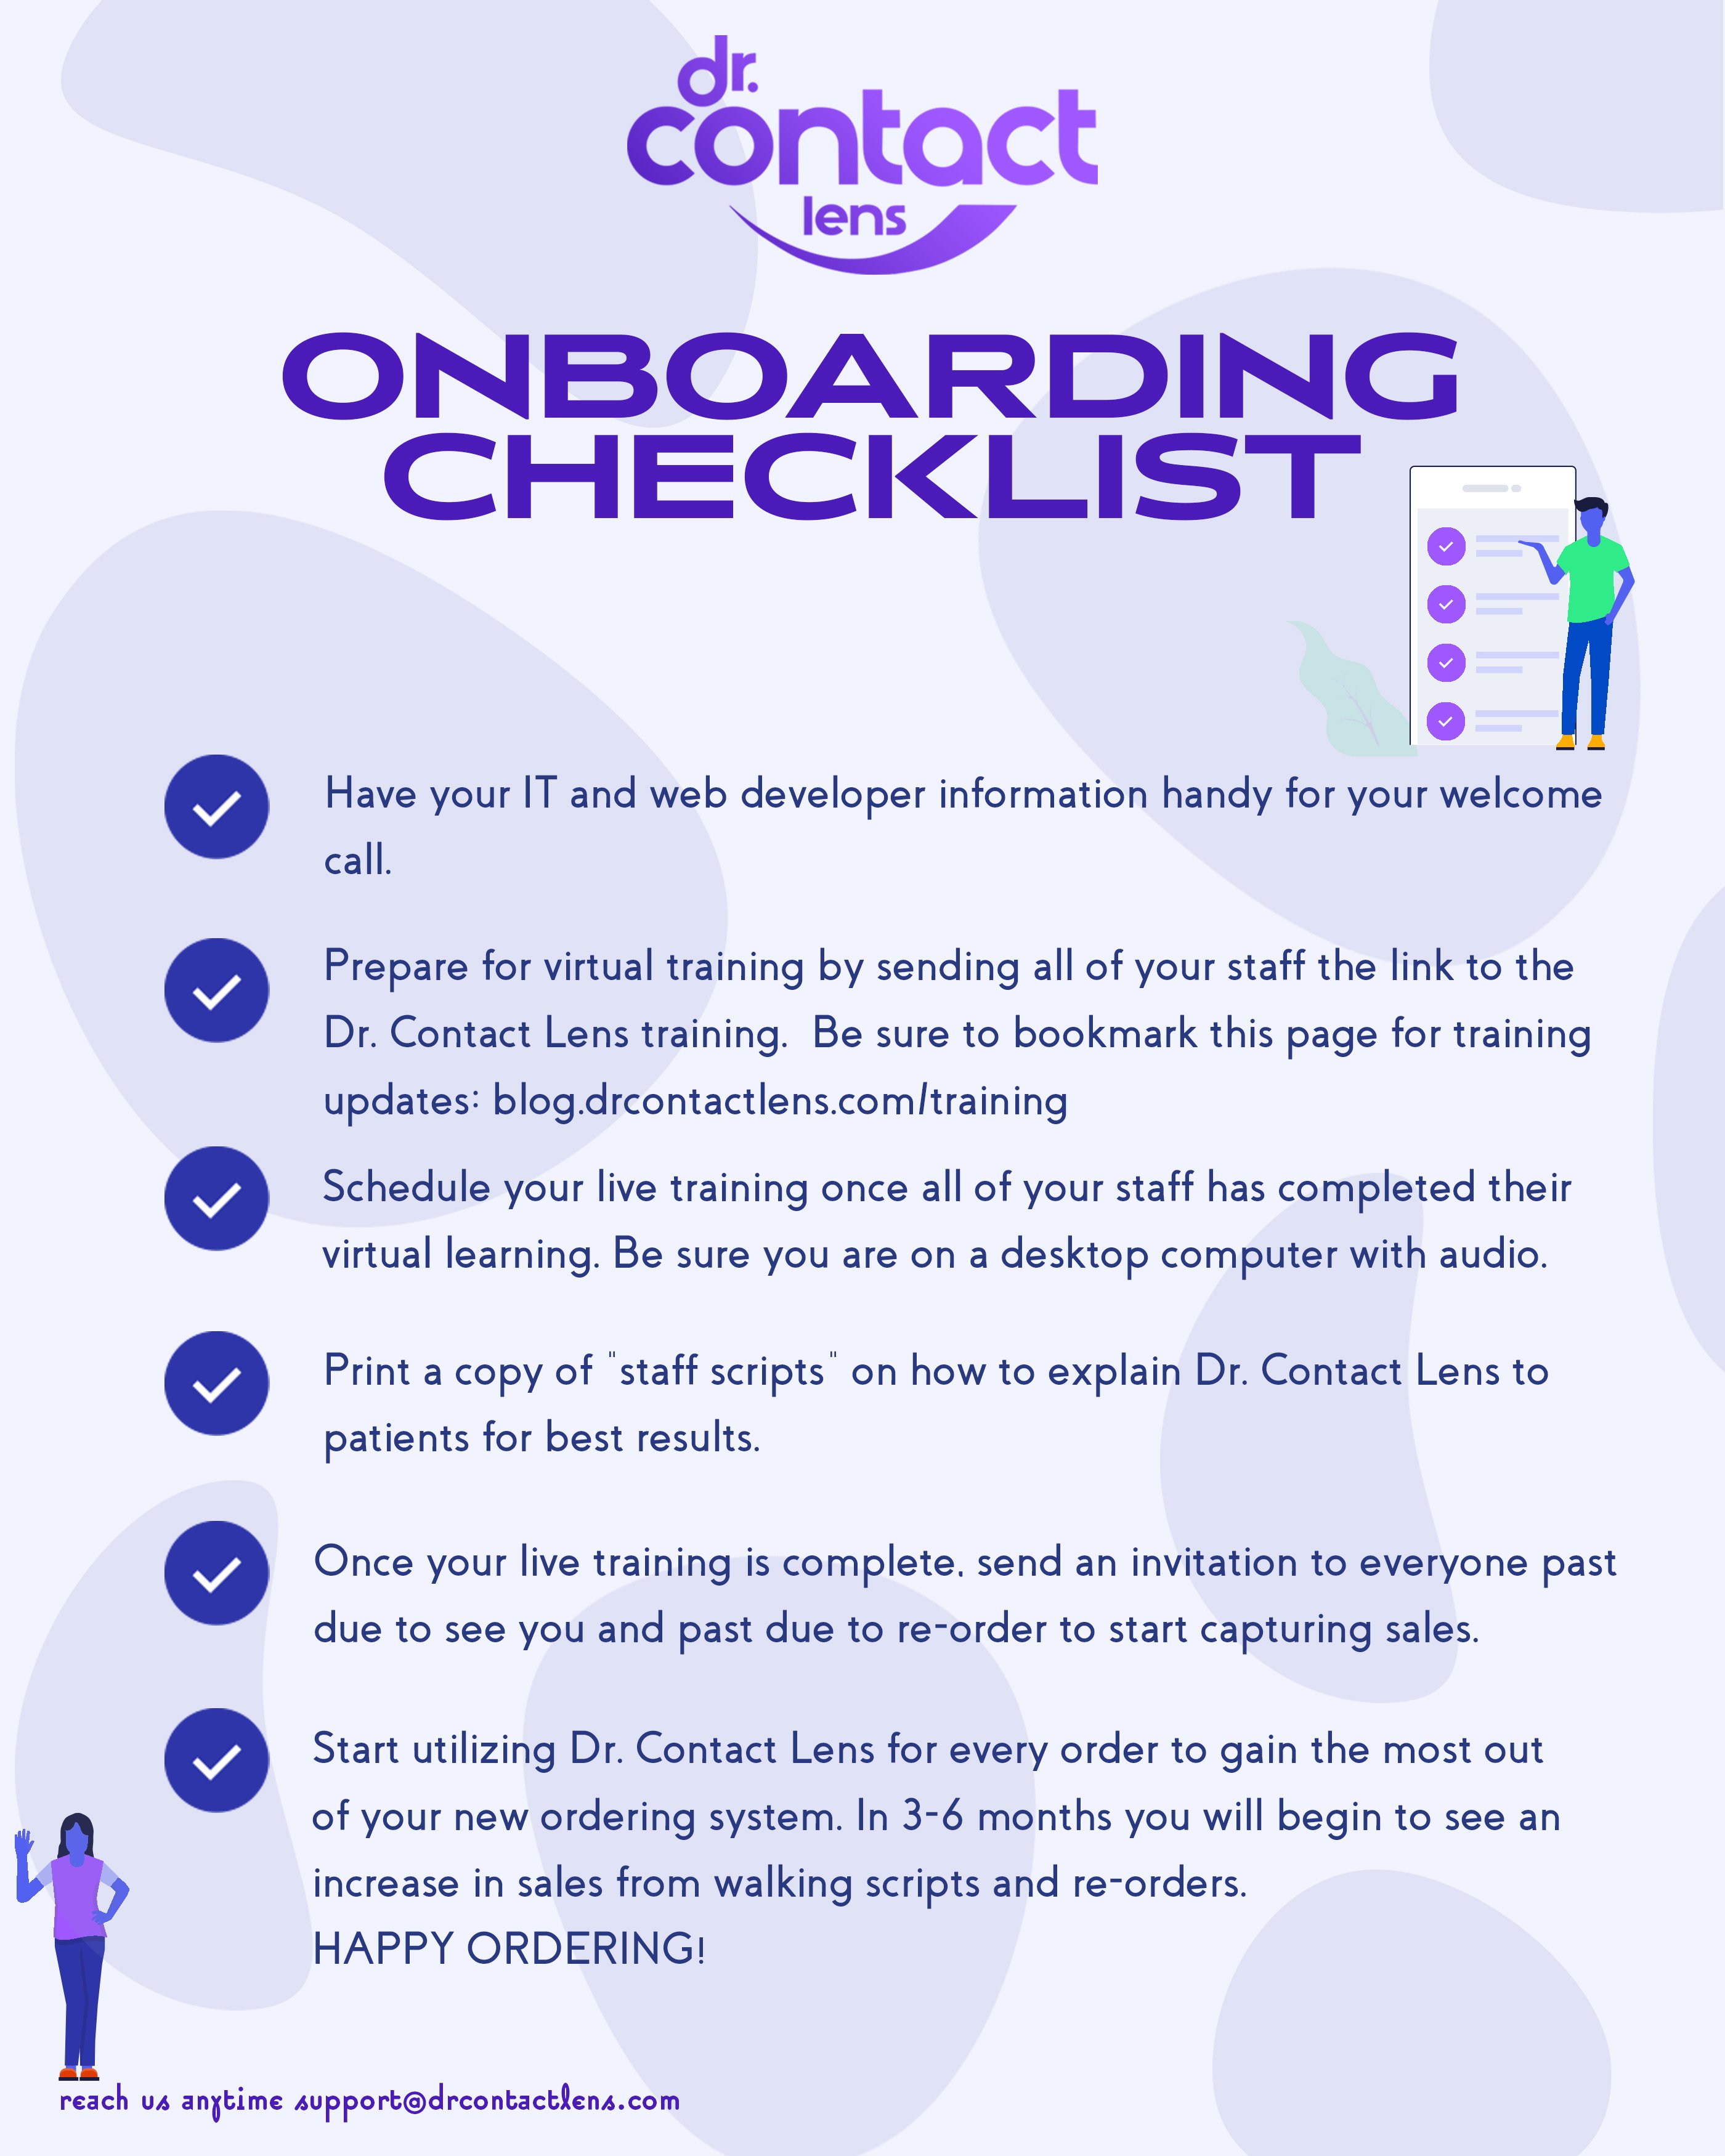 Onboarding checklist